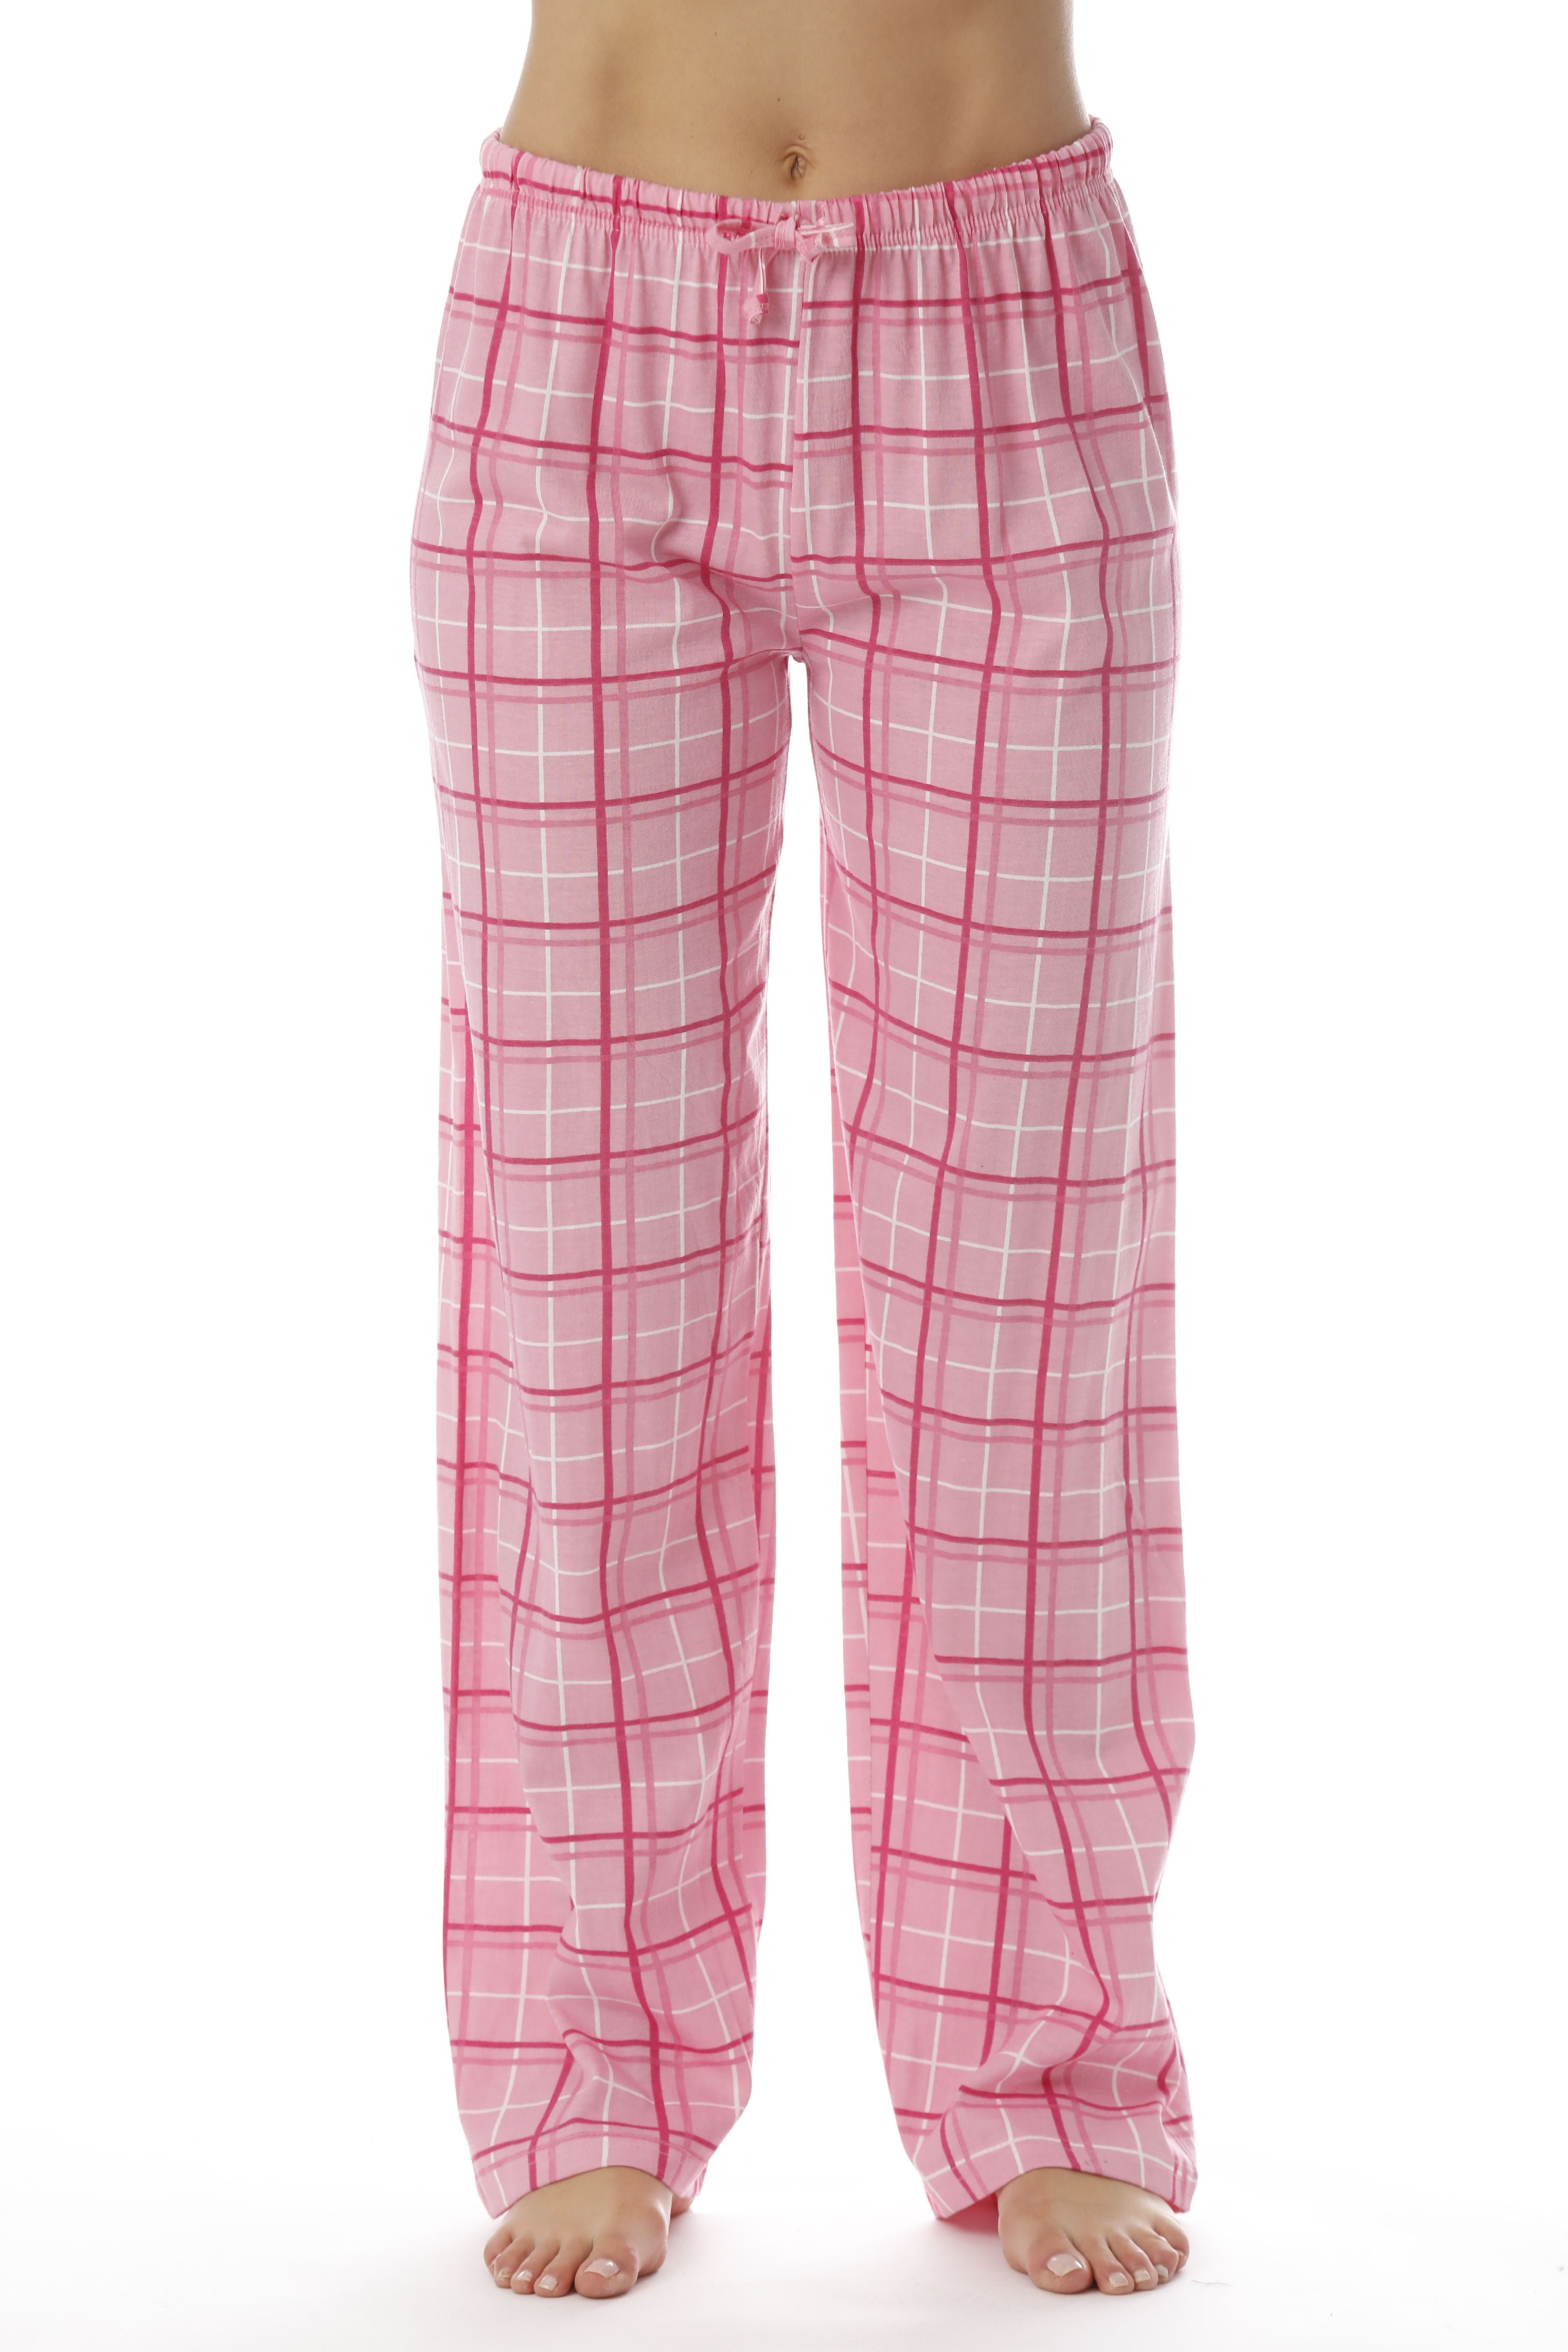 Just Love Women Plaid Pajama Pants Sleepwear (Pink Plaid, 1X)